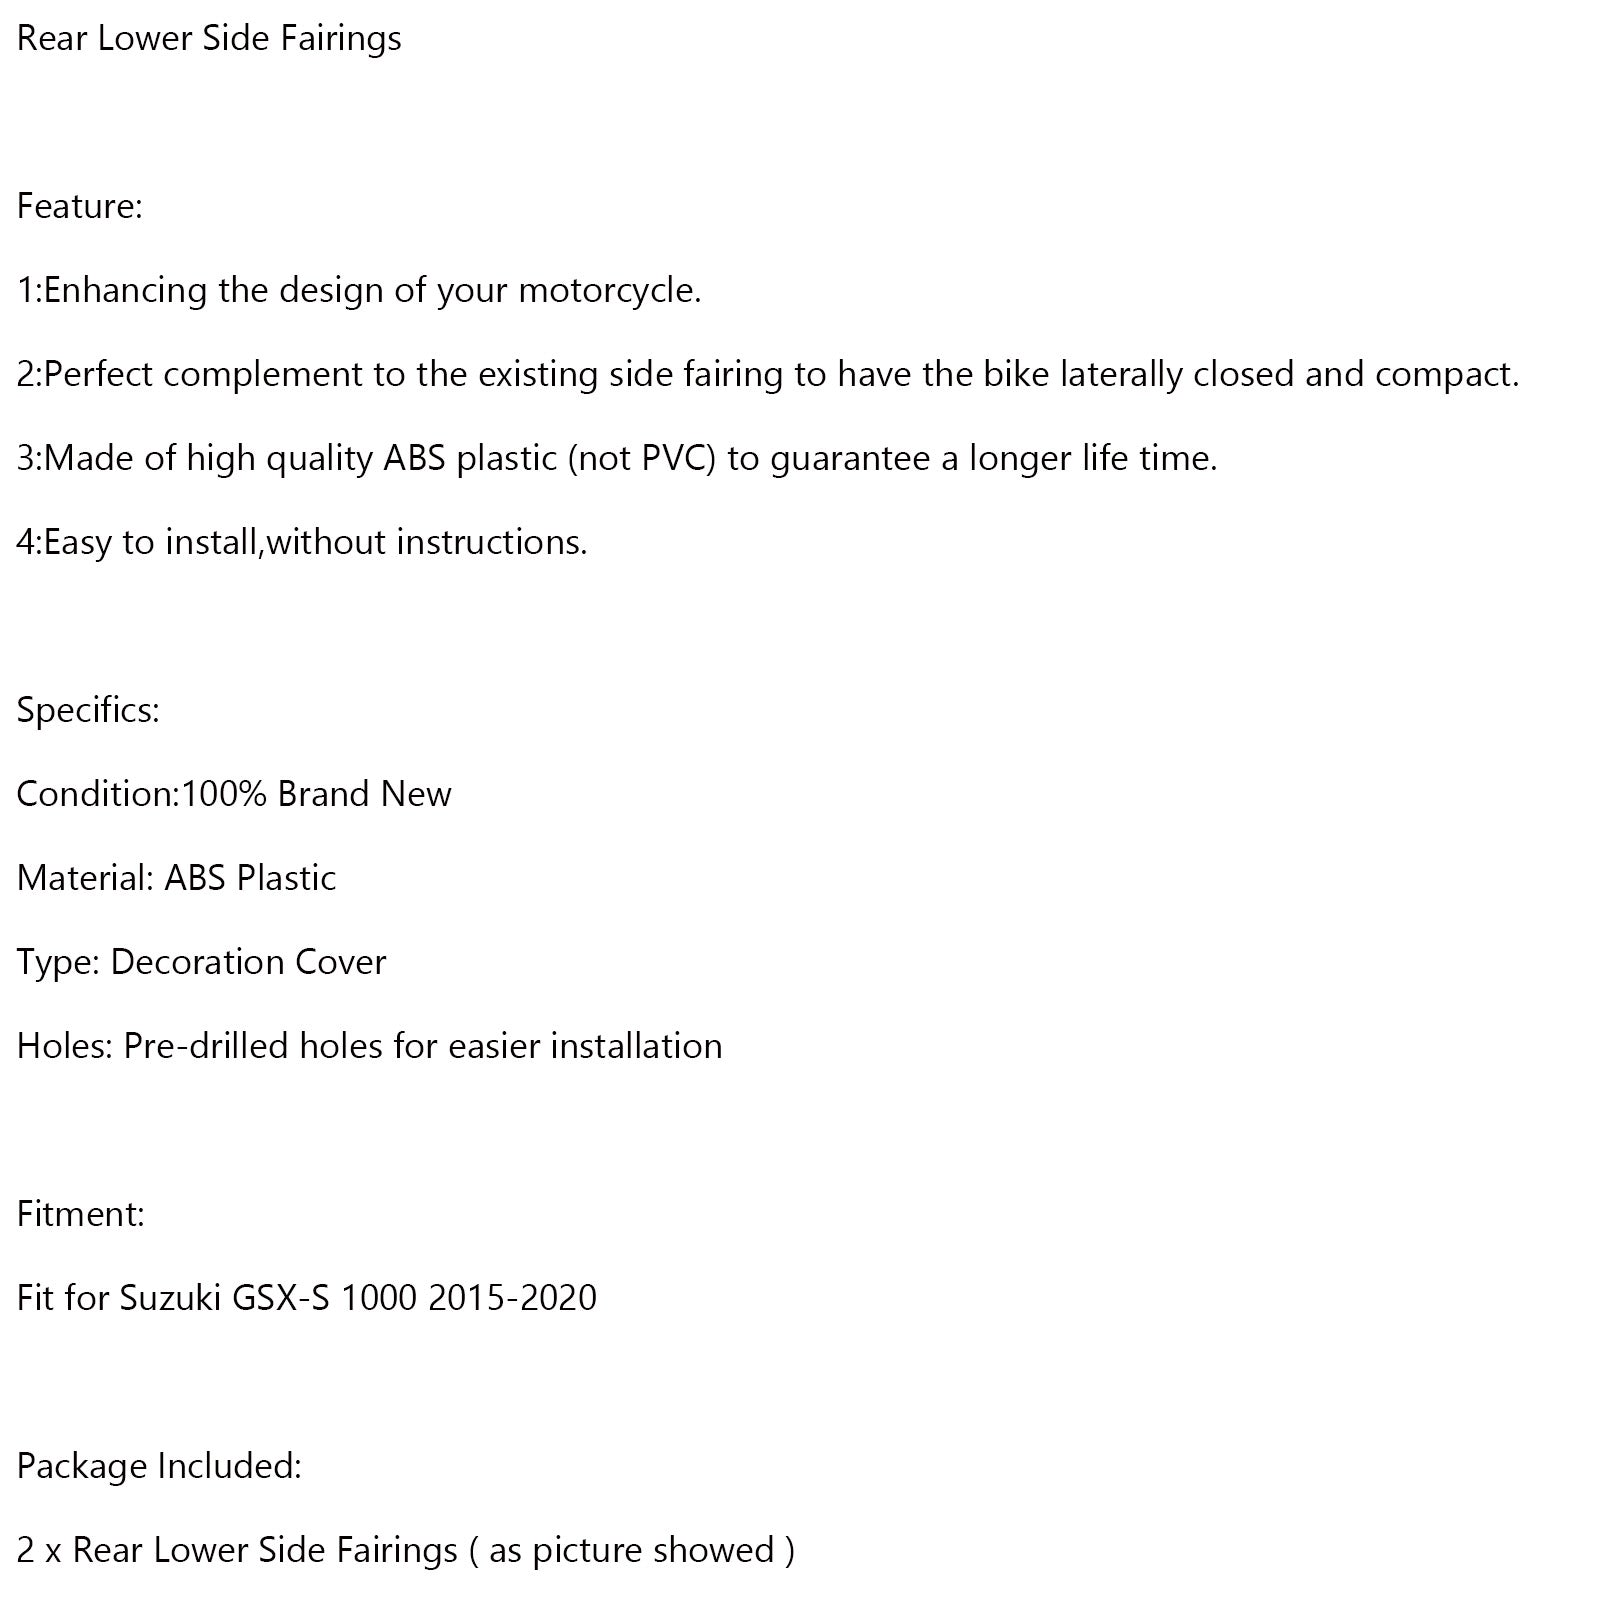 Rear Lower Side Fairings For Suzuki GSX-S 1000 2015-2020